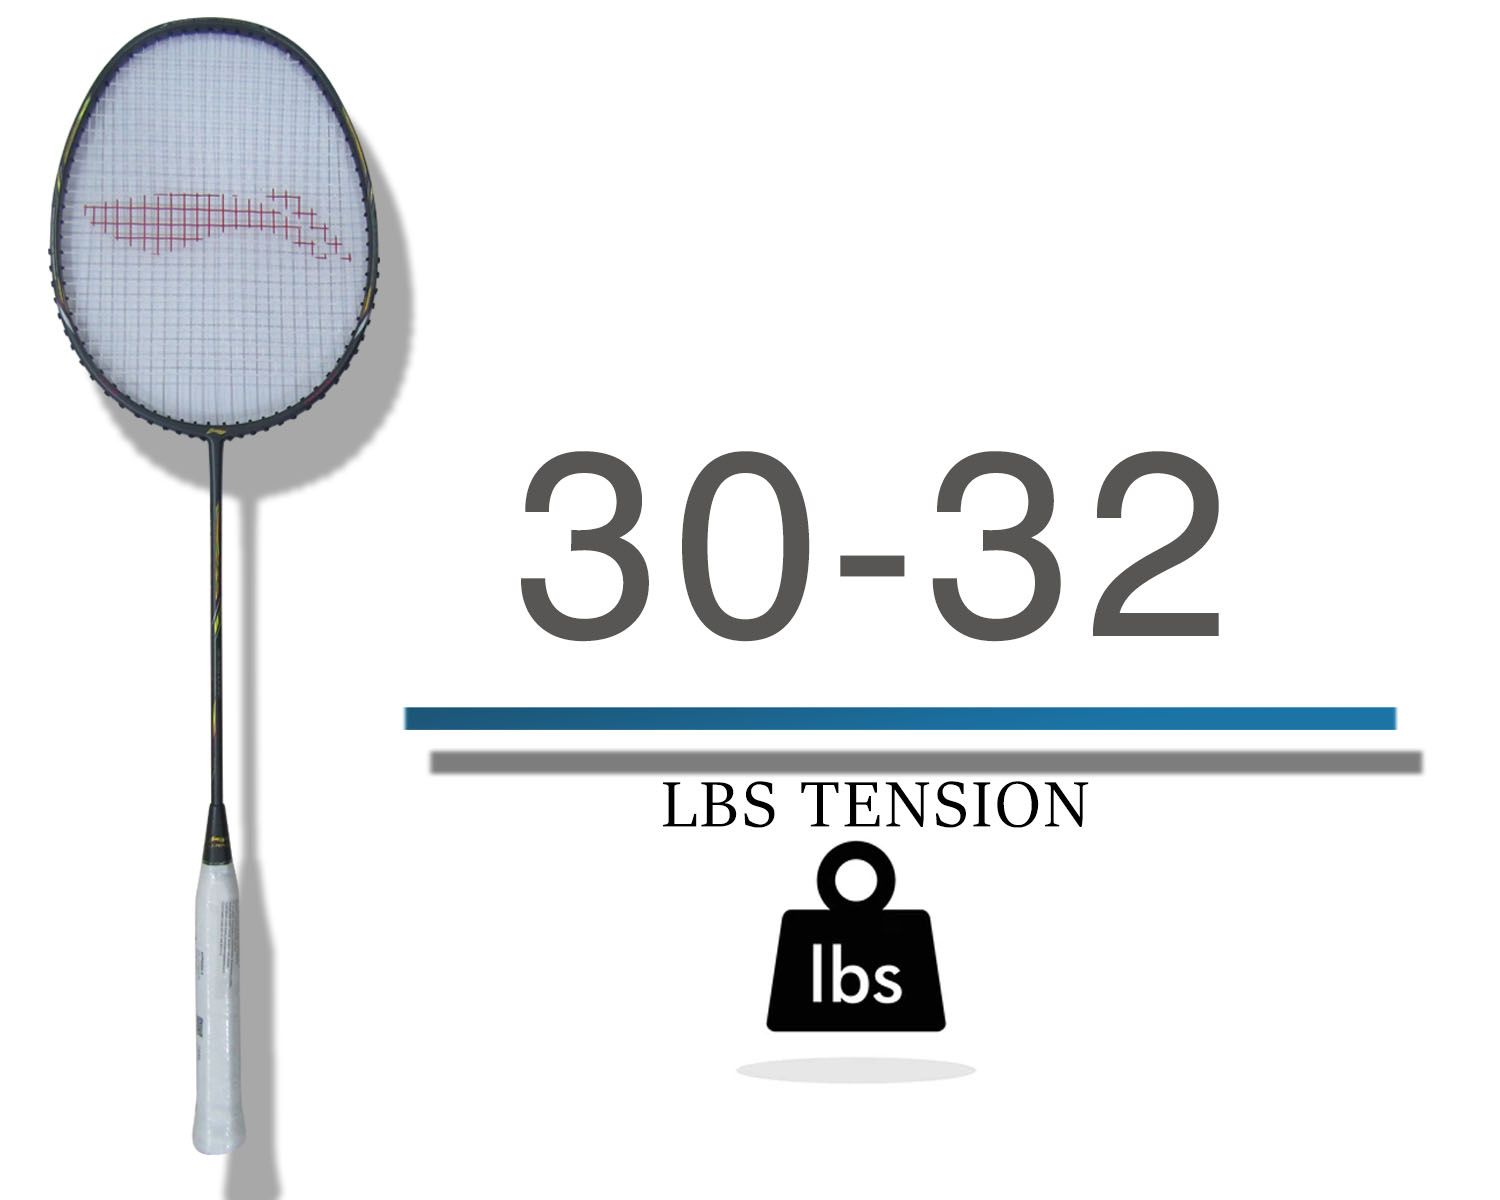 Li Ning Air Force 78 G2 Badminton Racket